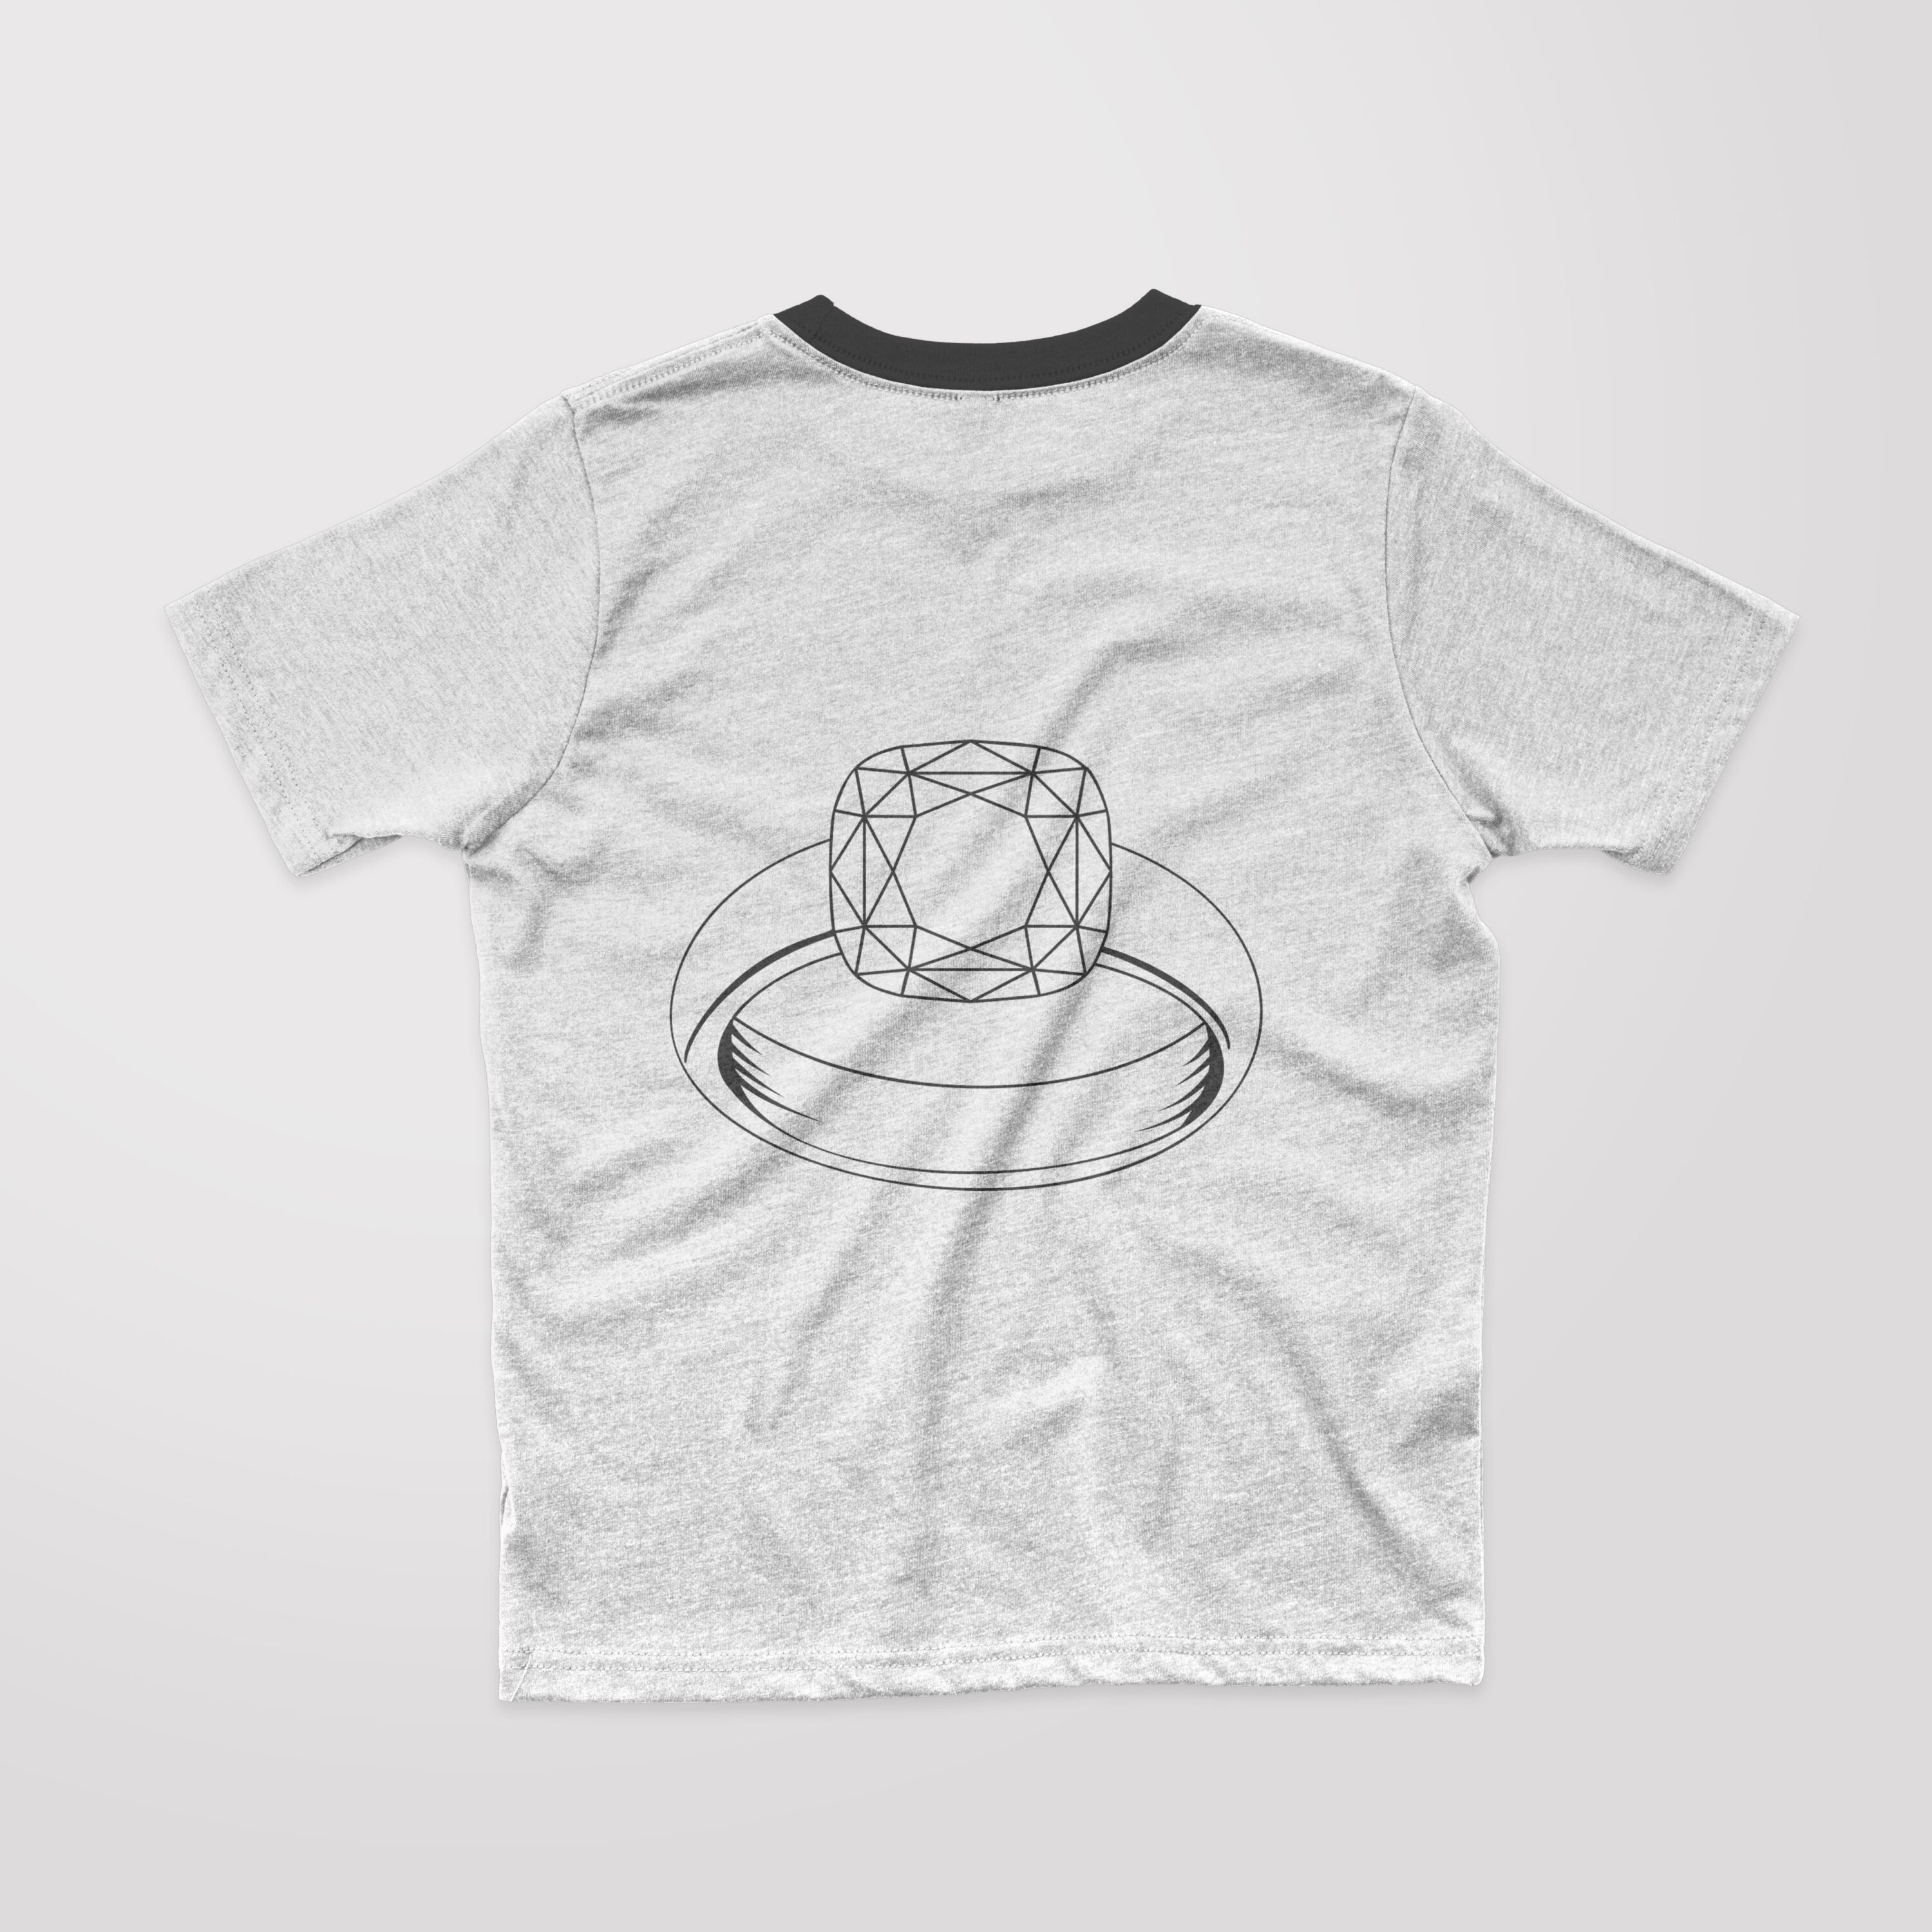 outline diamond ring t shirt designs bundle 8 975